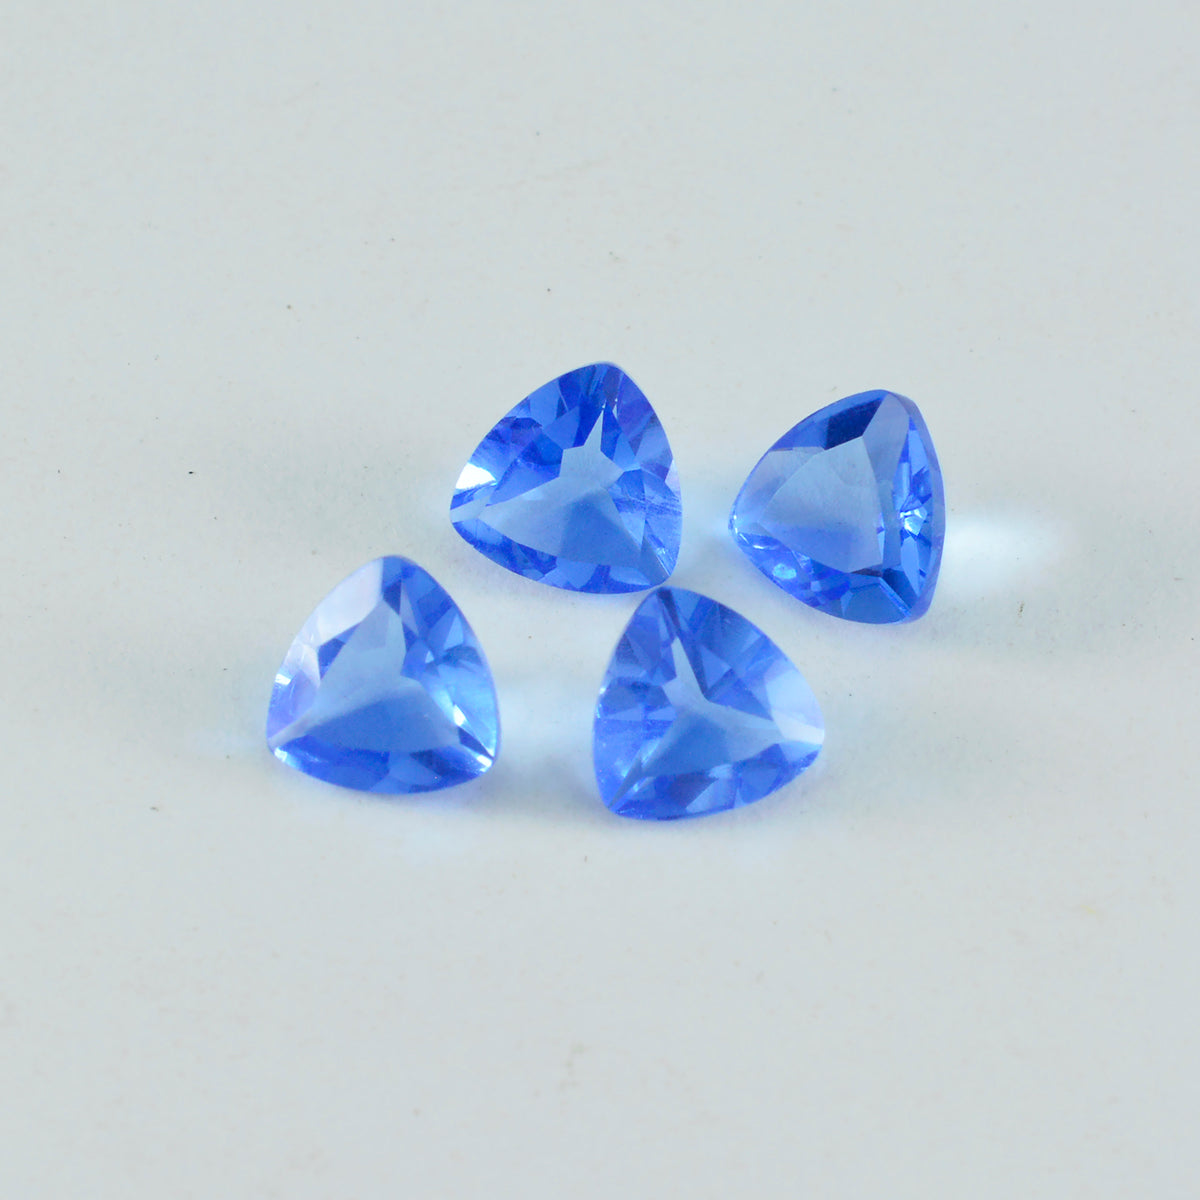 Riyogems 1PC Blue Sapphire CZ Faceted 15x15 mm Trillion Shape A Quality Loose Stone